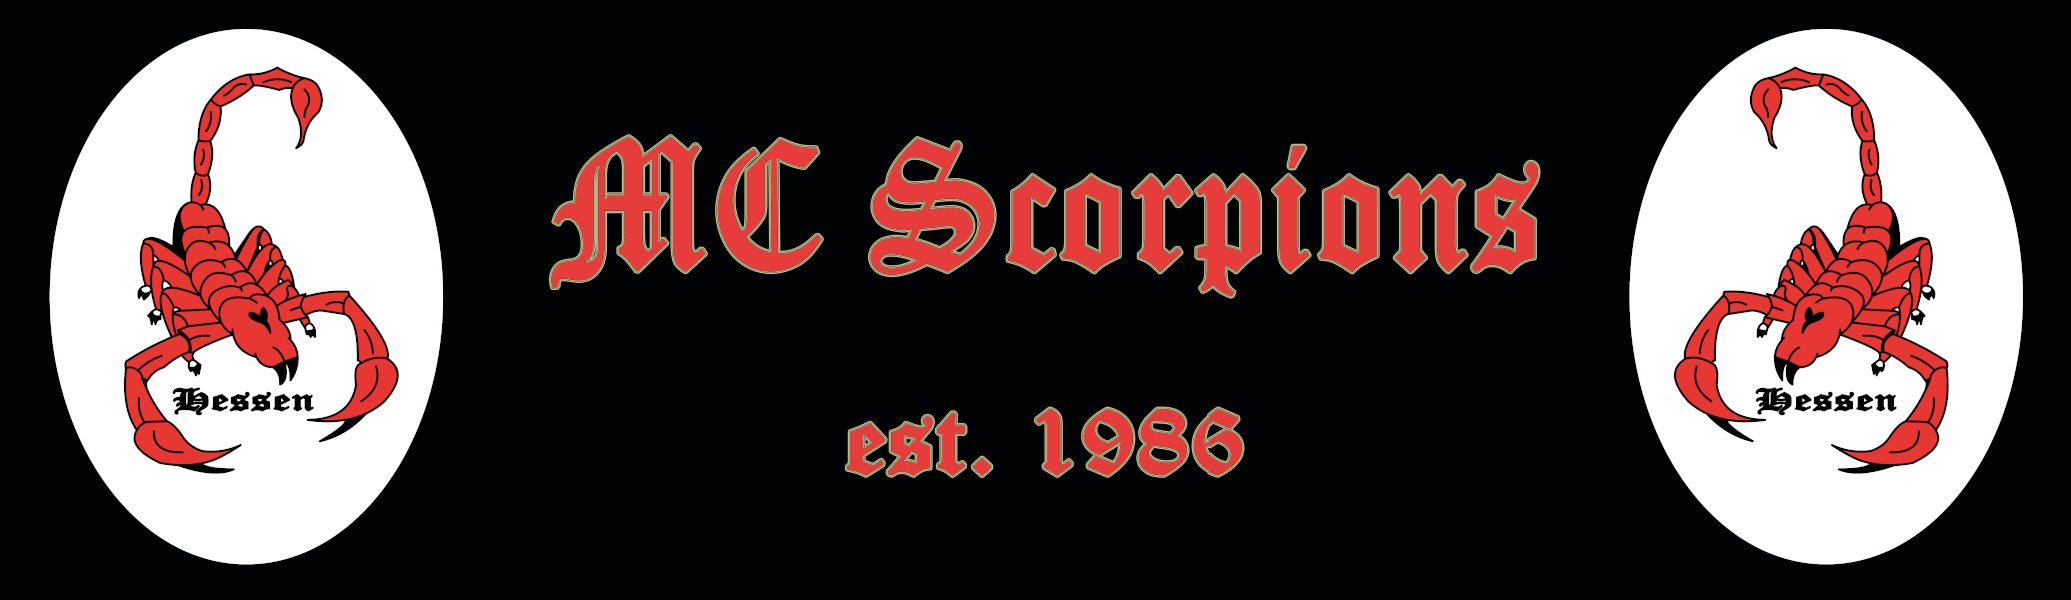 MC Scorpions Hessen